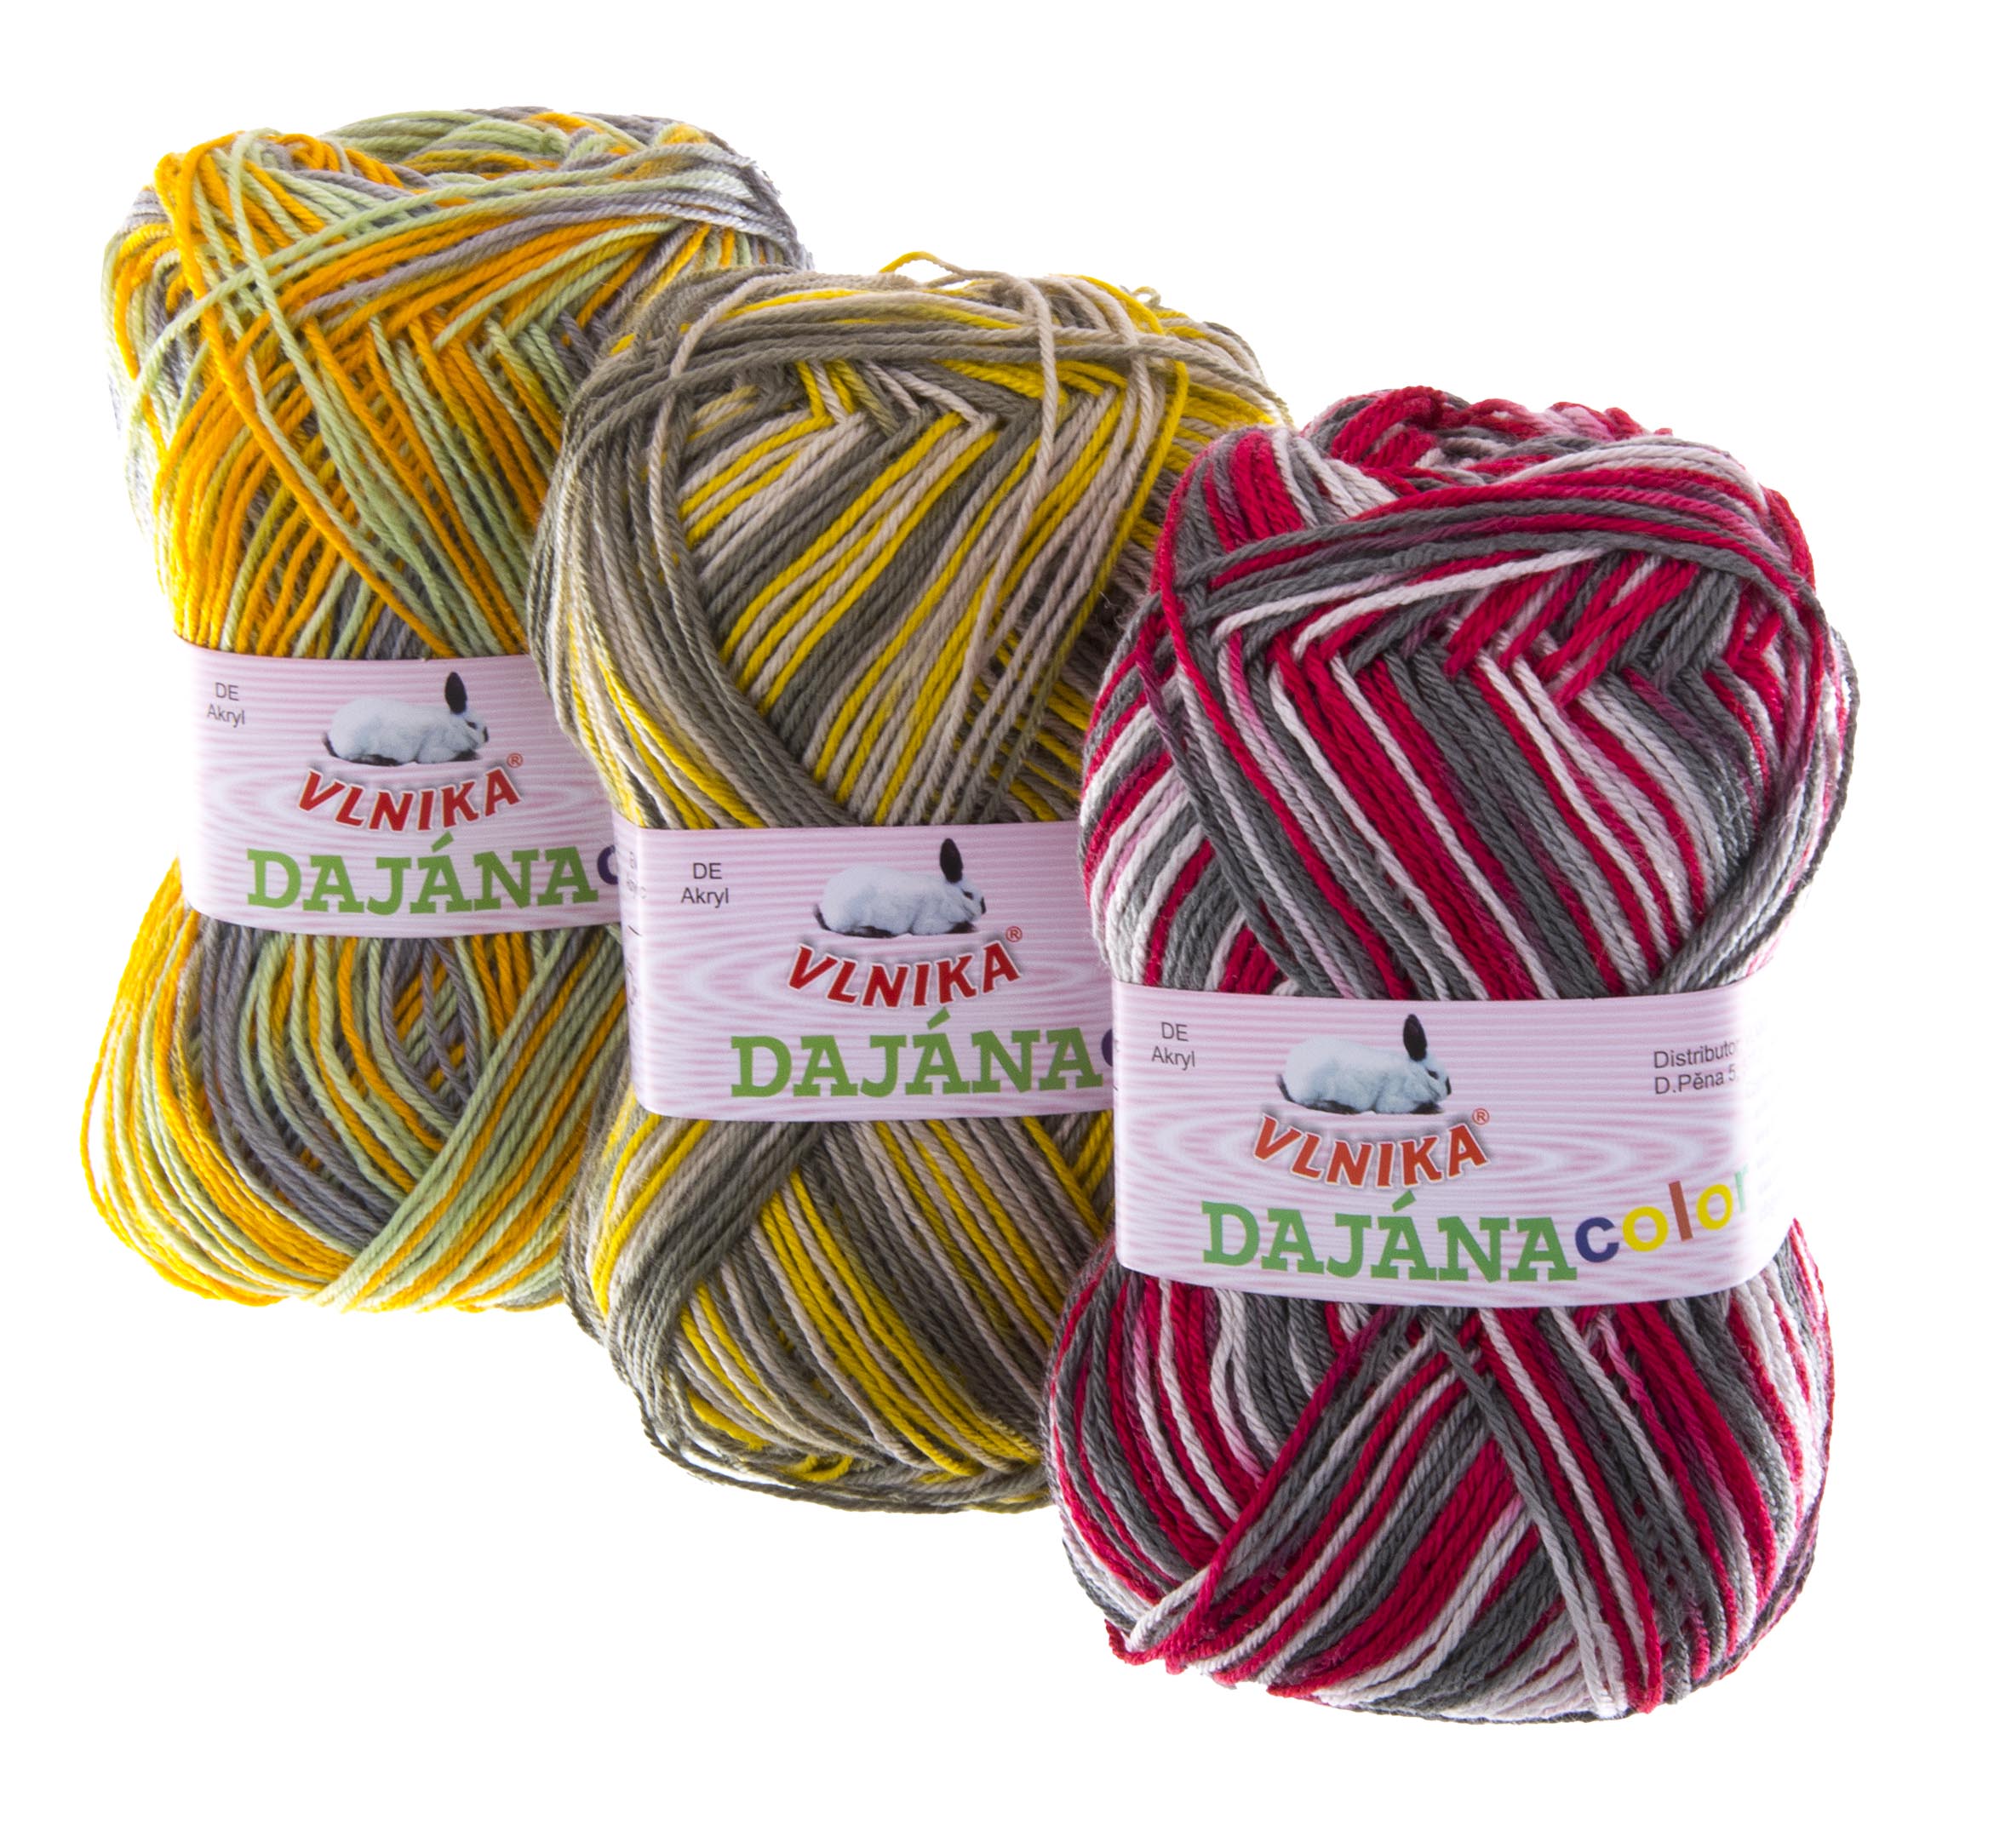 Dajána color Yarn  Vlnika - yarn, wool warehouse - buy all of your yarn  wool, needles, and other knitting supplies online